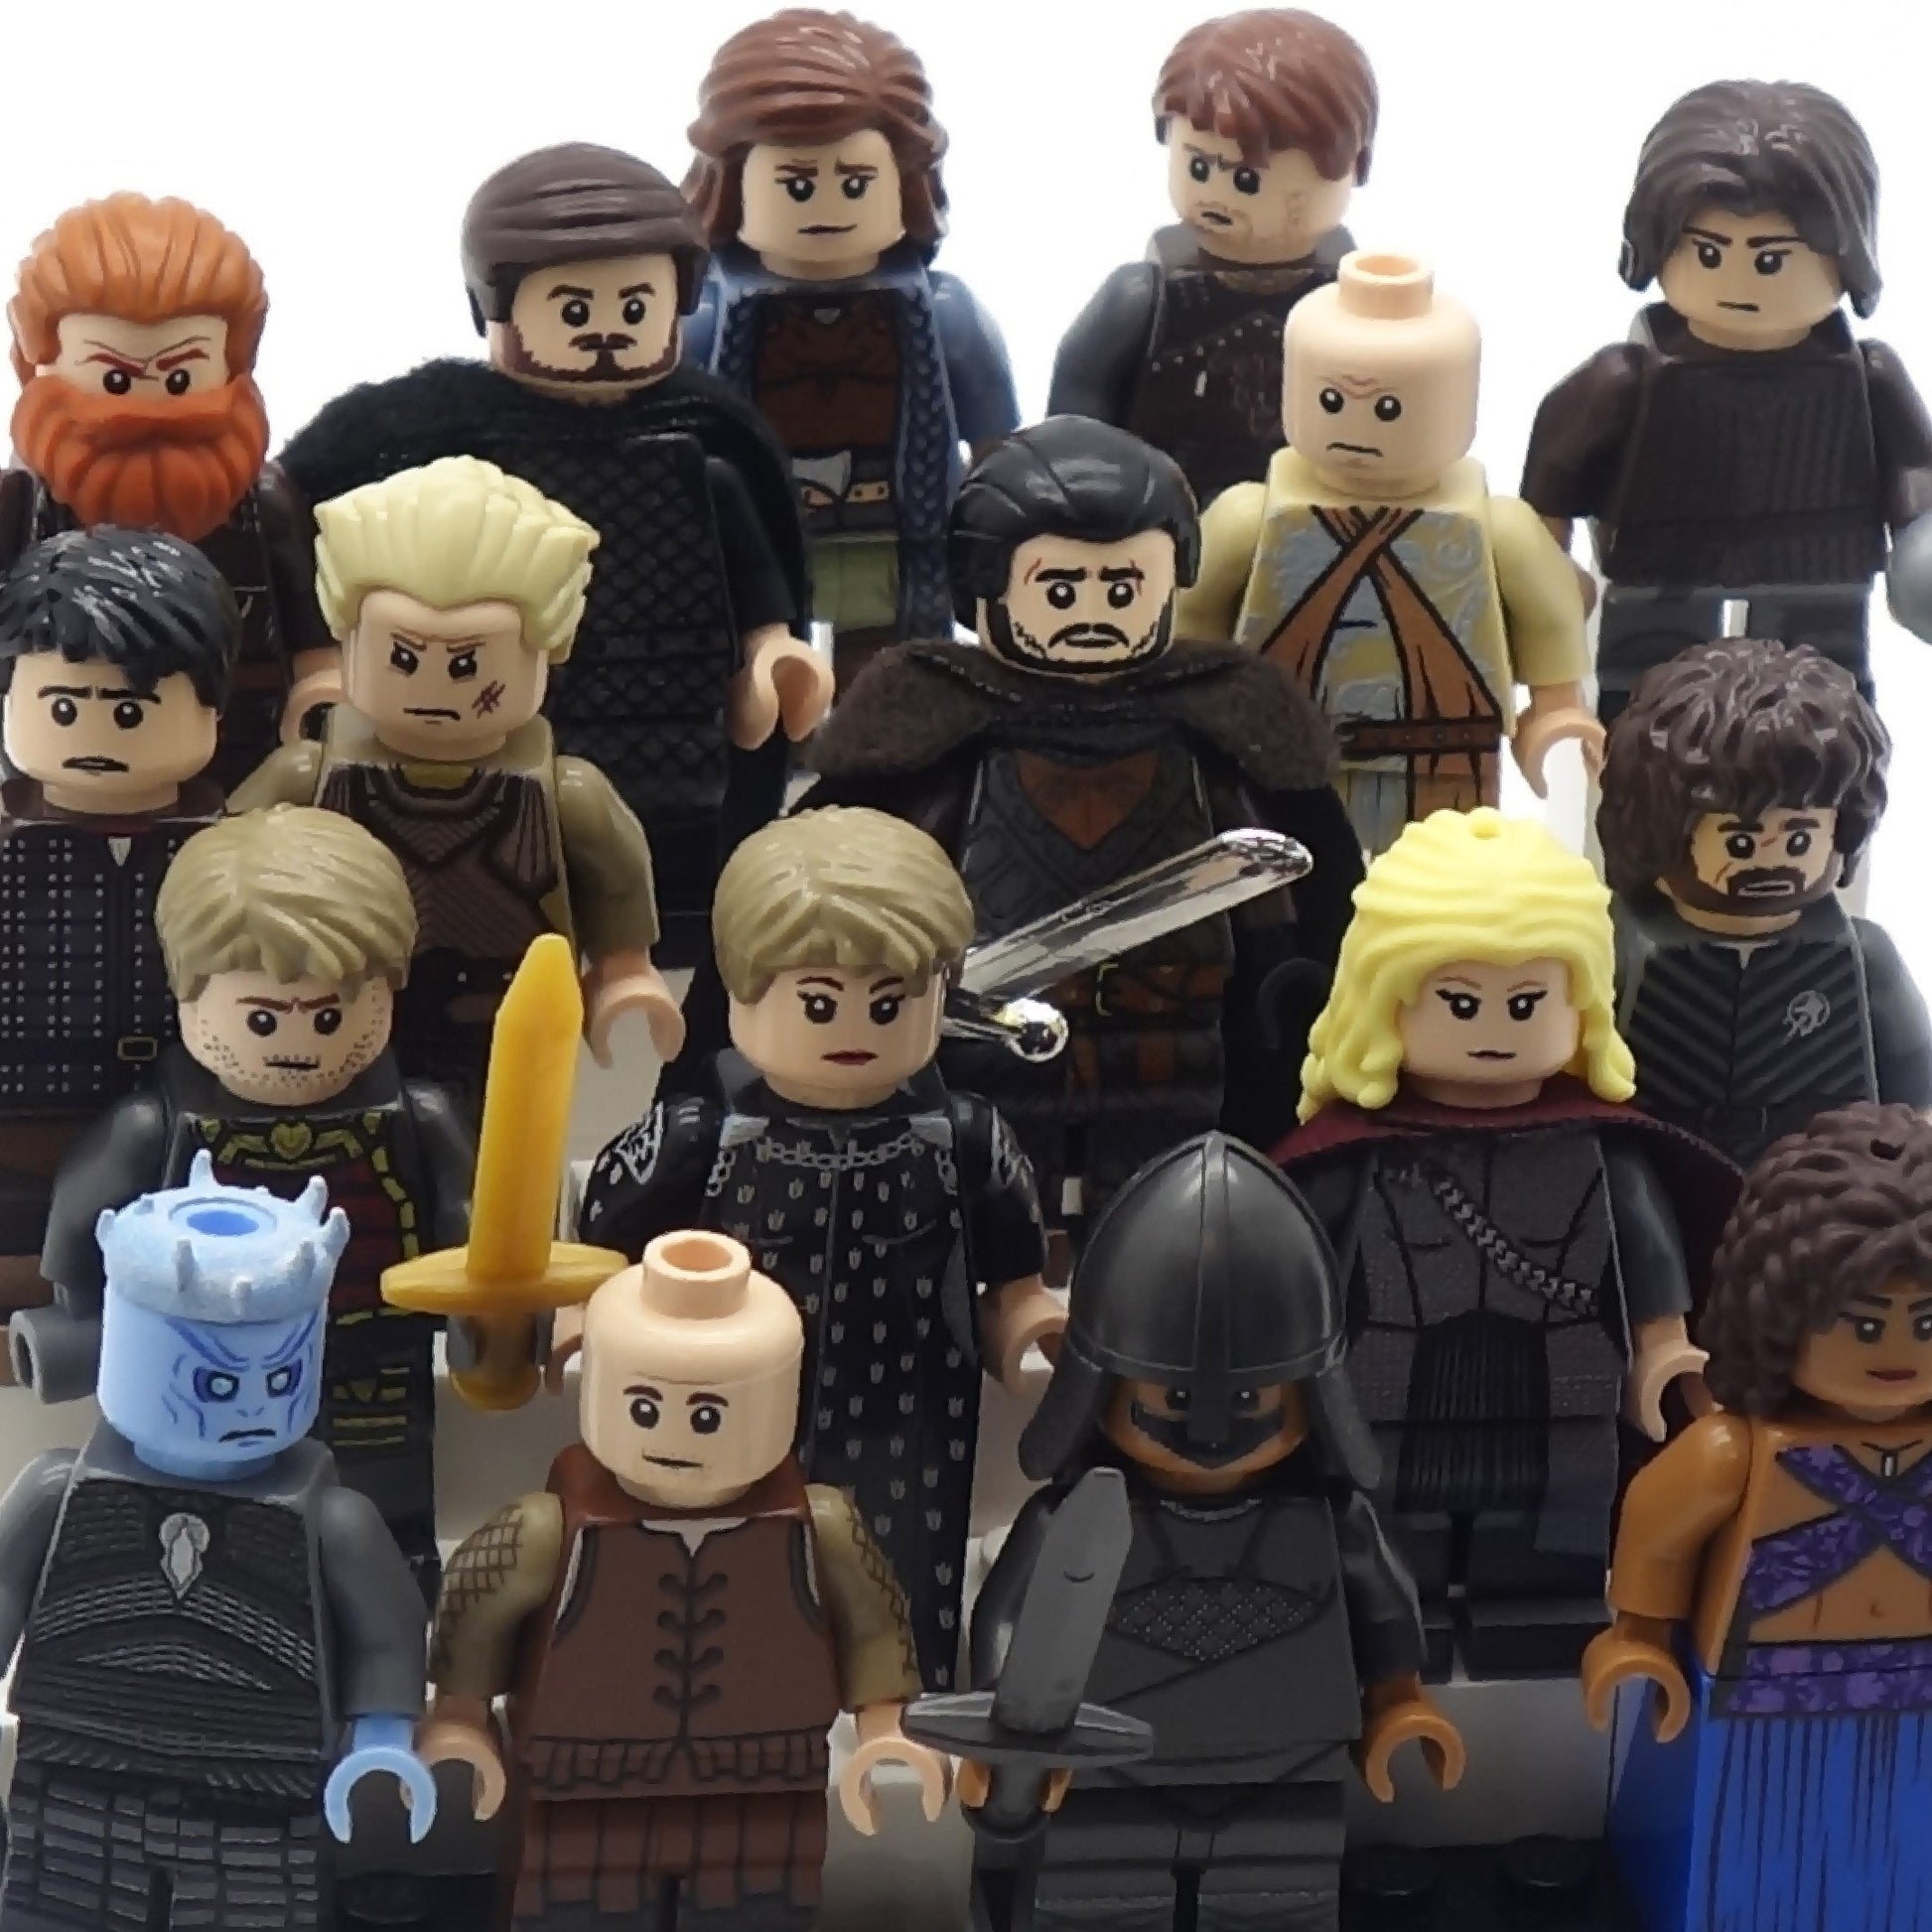 Full Range of Ganme of Thrones (Medieval Fantasy) Minifigs - Custom LEGO Minifigures